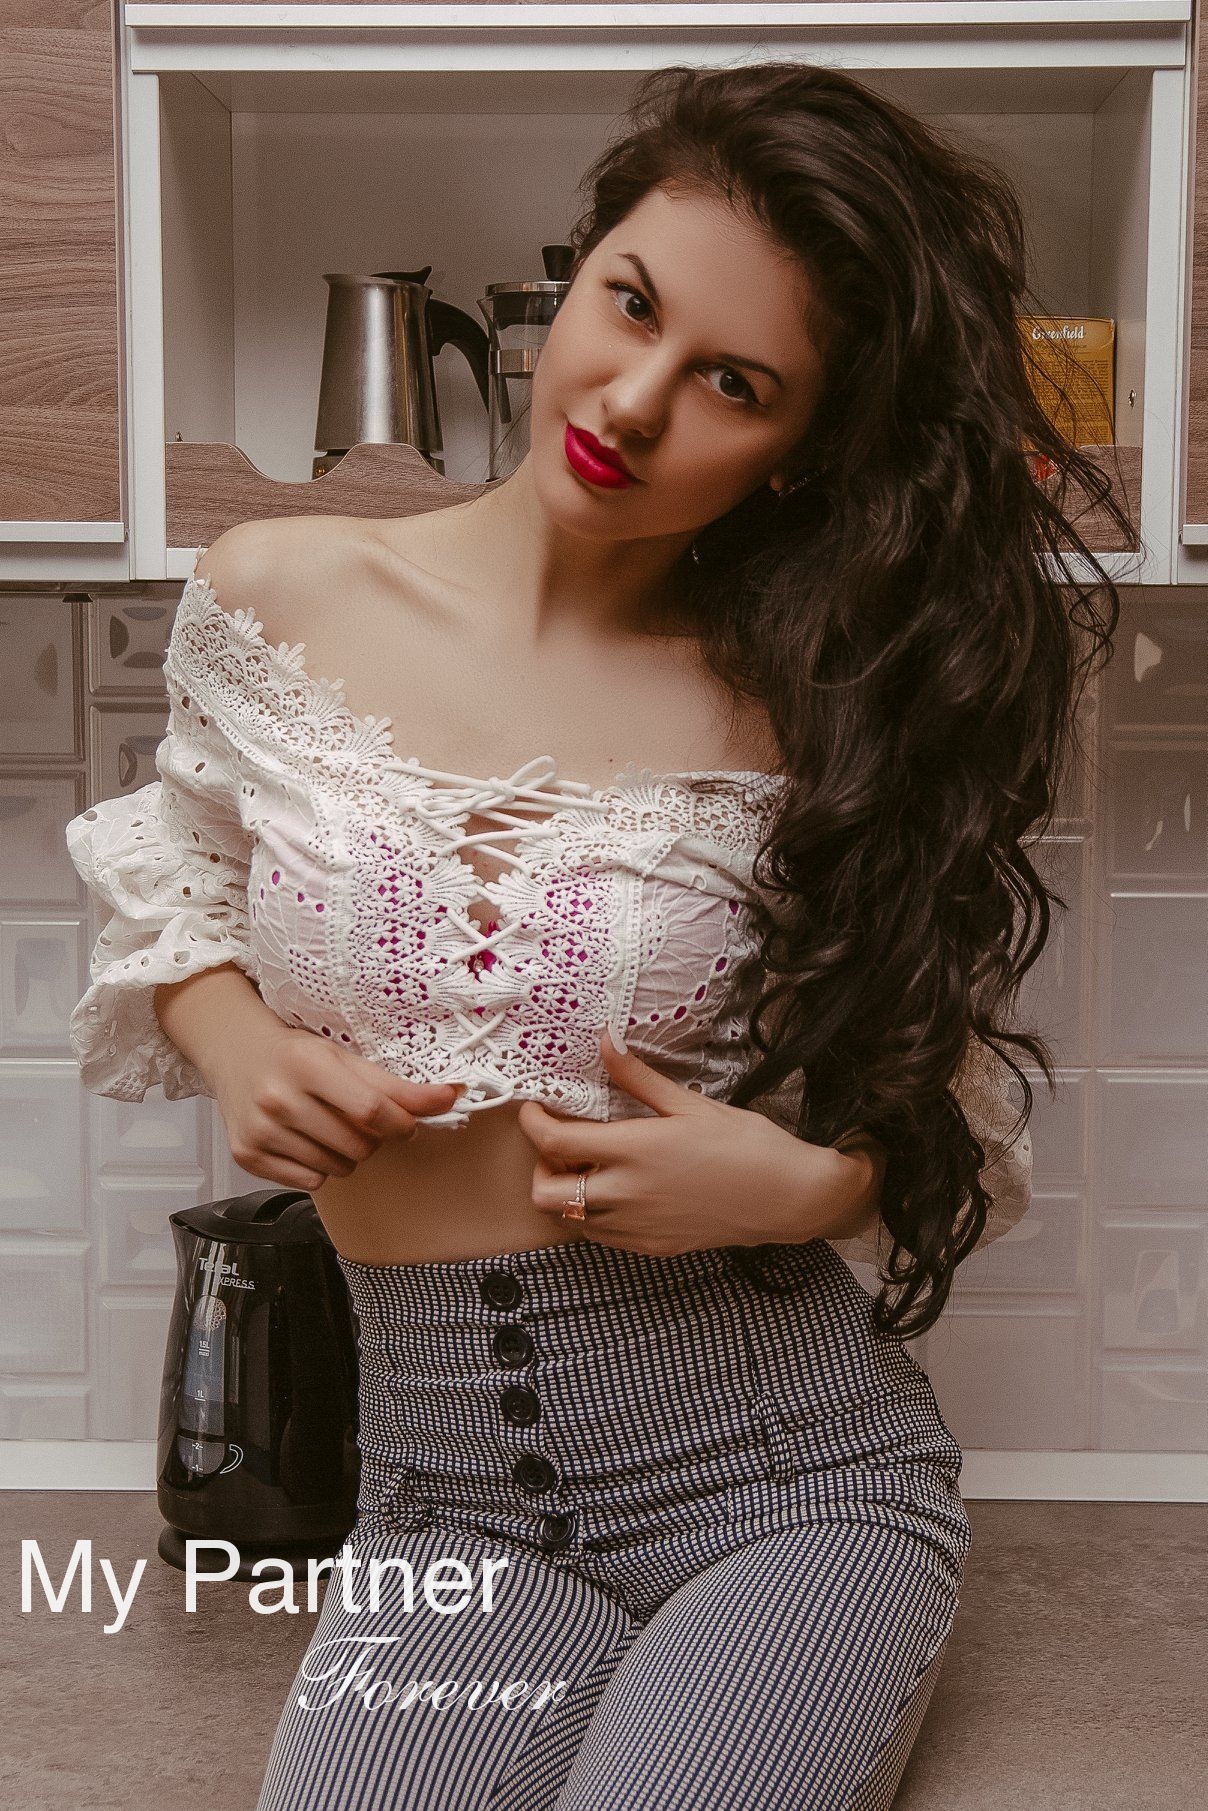 Dating Service to Meet Sexy Ukrainian Lady Marina from Vinnitsa, Ukraine